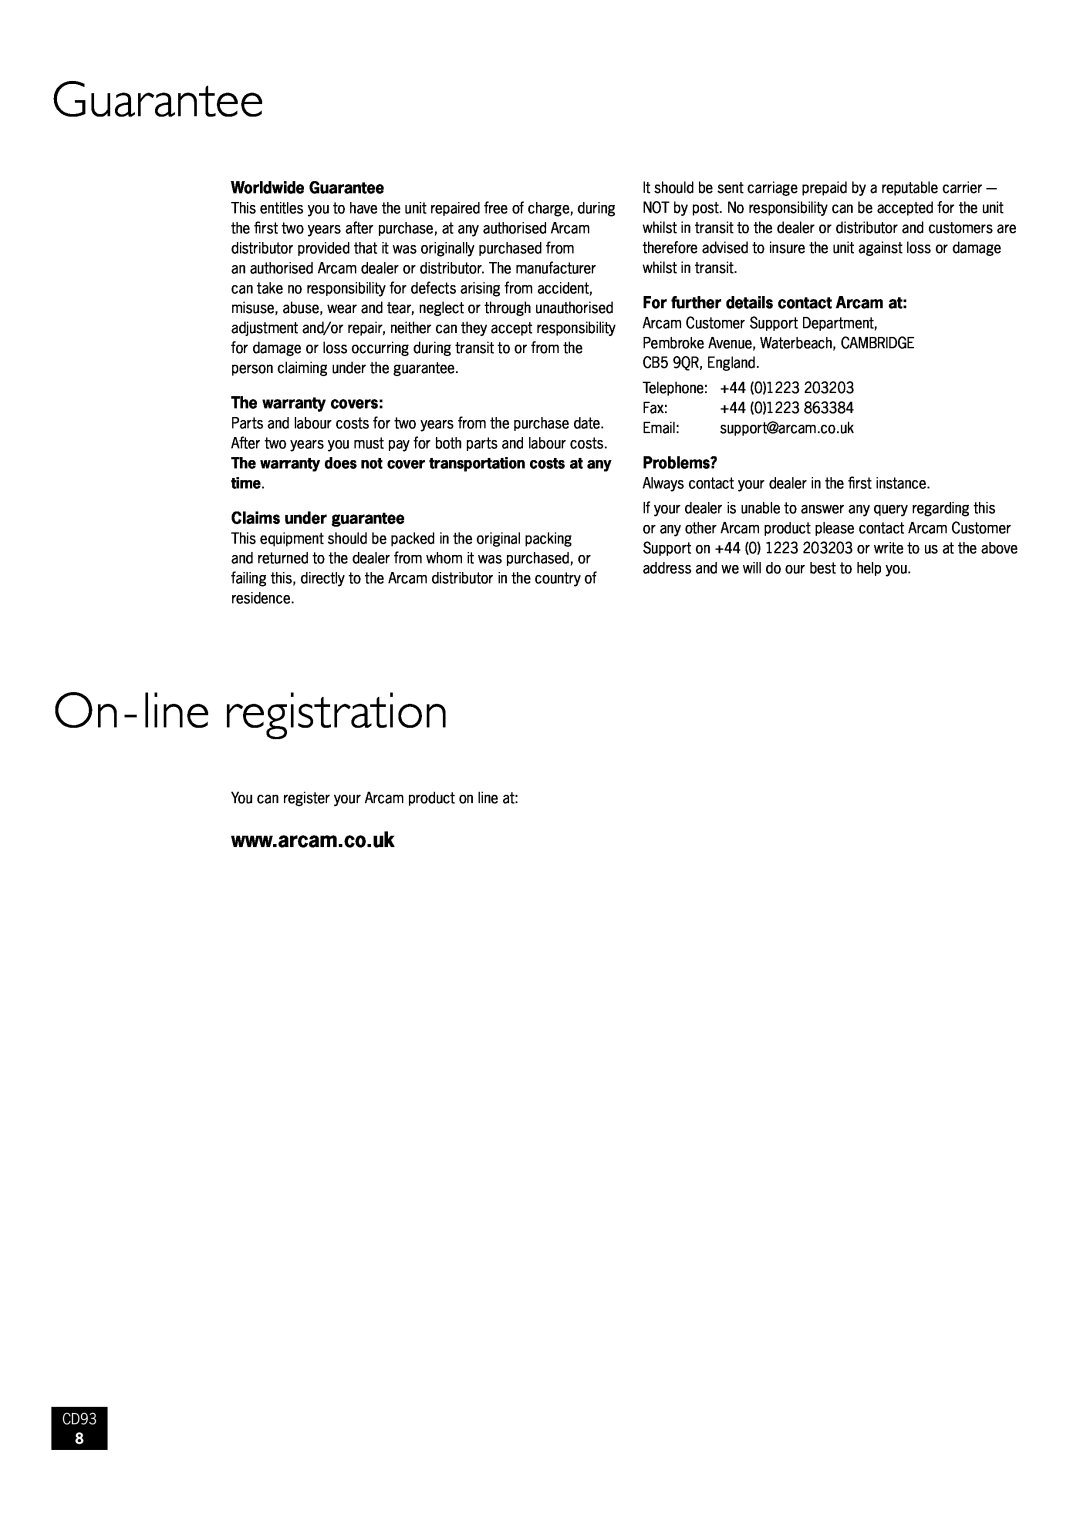 Arcam CD93/92 manual Guarantee, On-lineregistration 